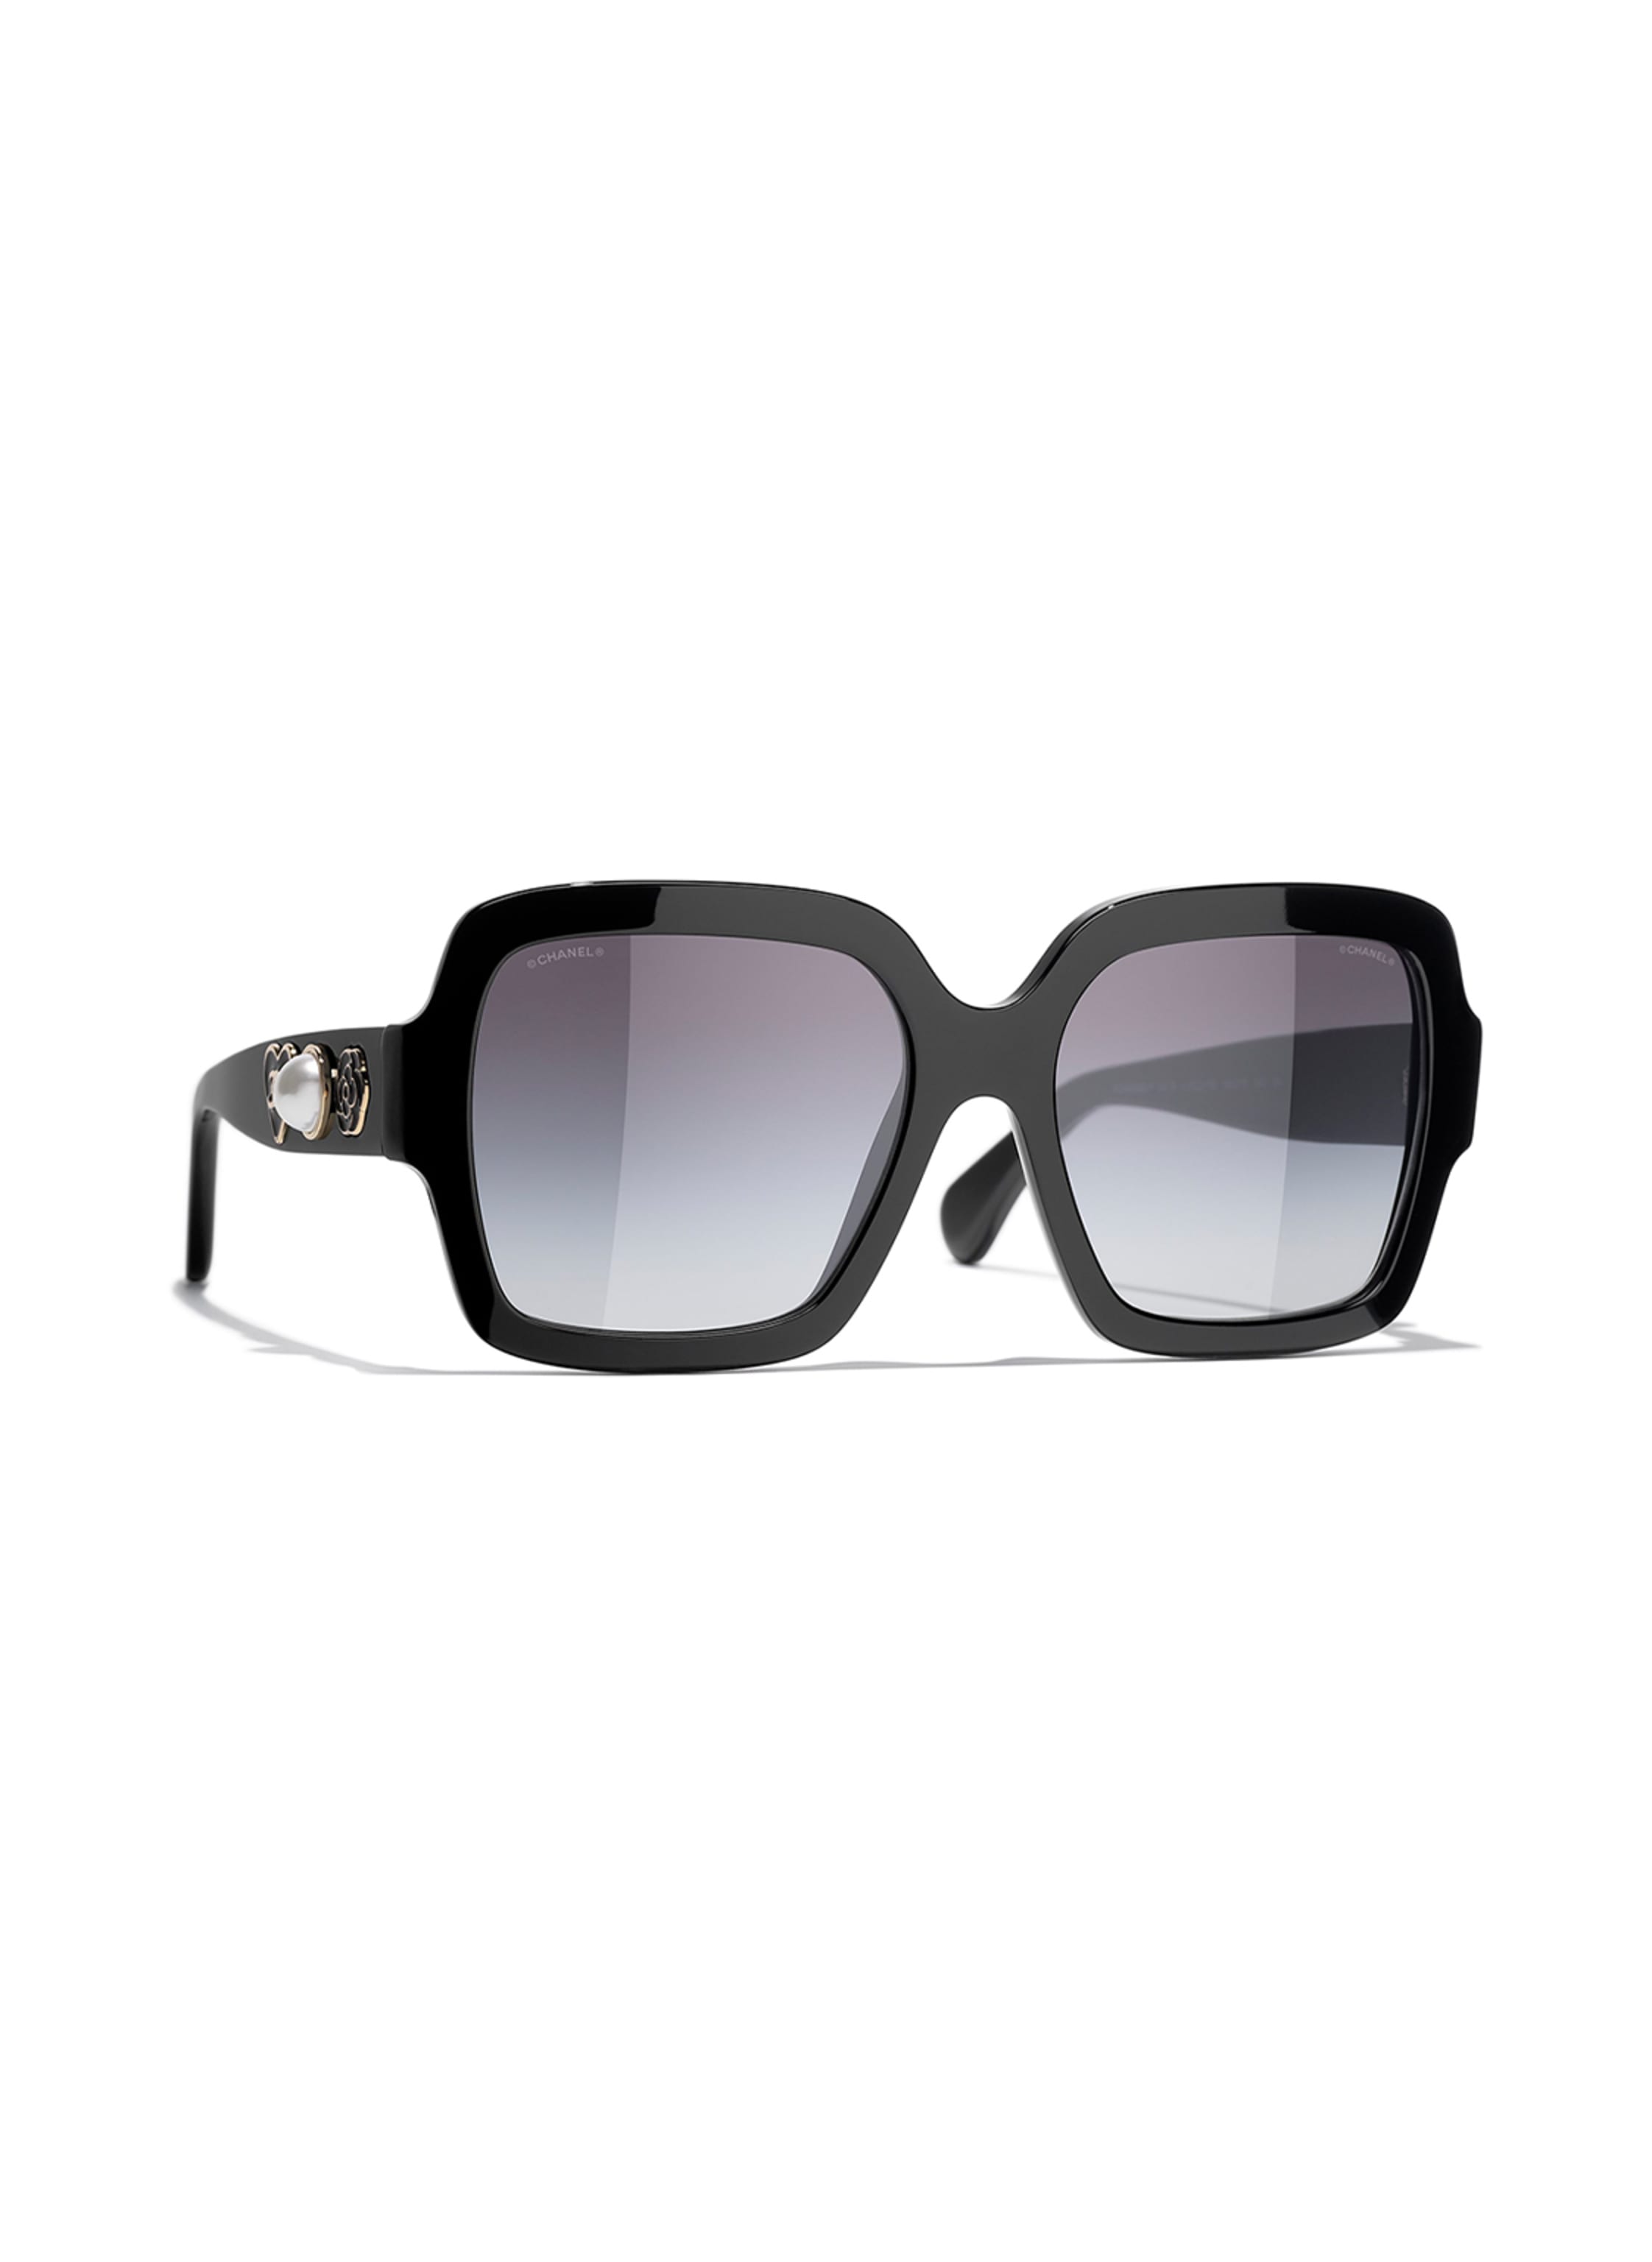 CHANEL Square sunglasses in c622s6 - black/ gray | Breuninger